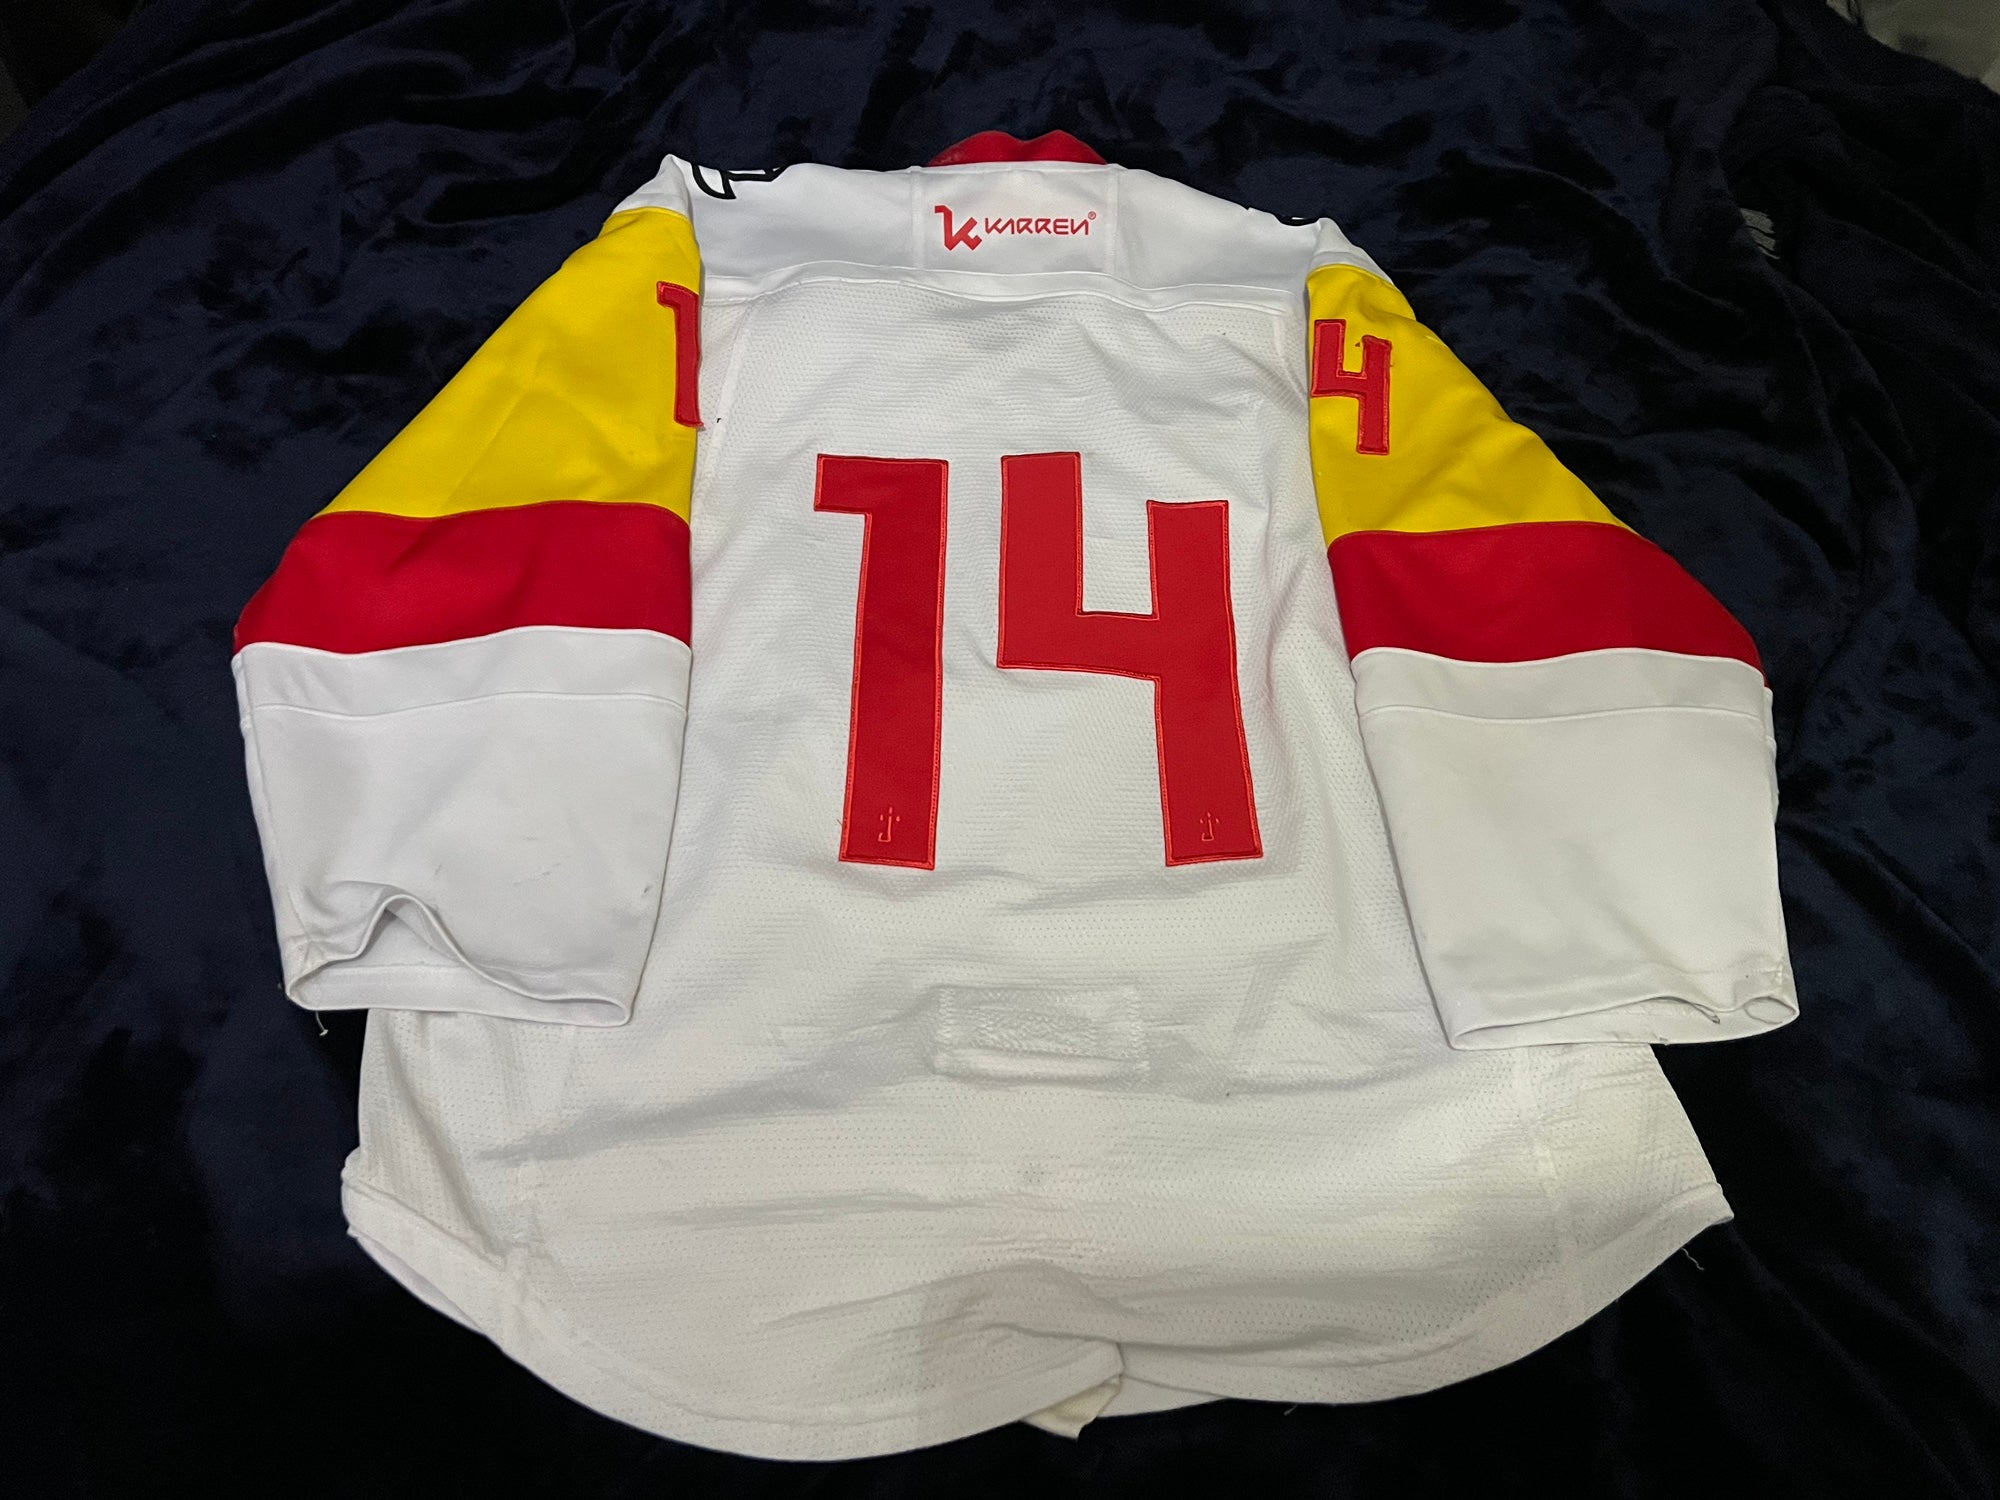 Jokerit U-20 #21 NOBR Game worn hockey jersey